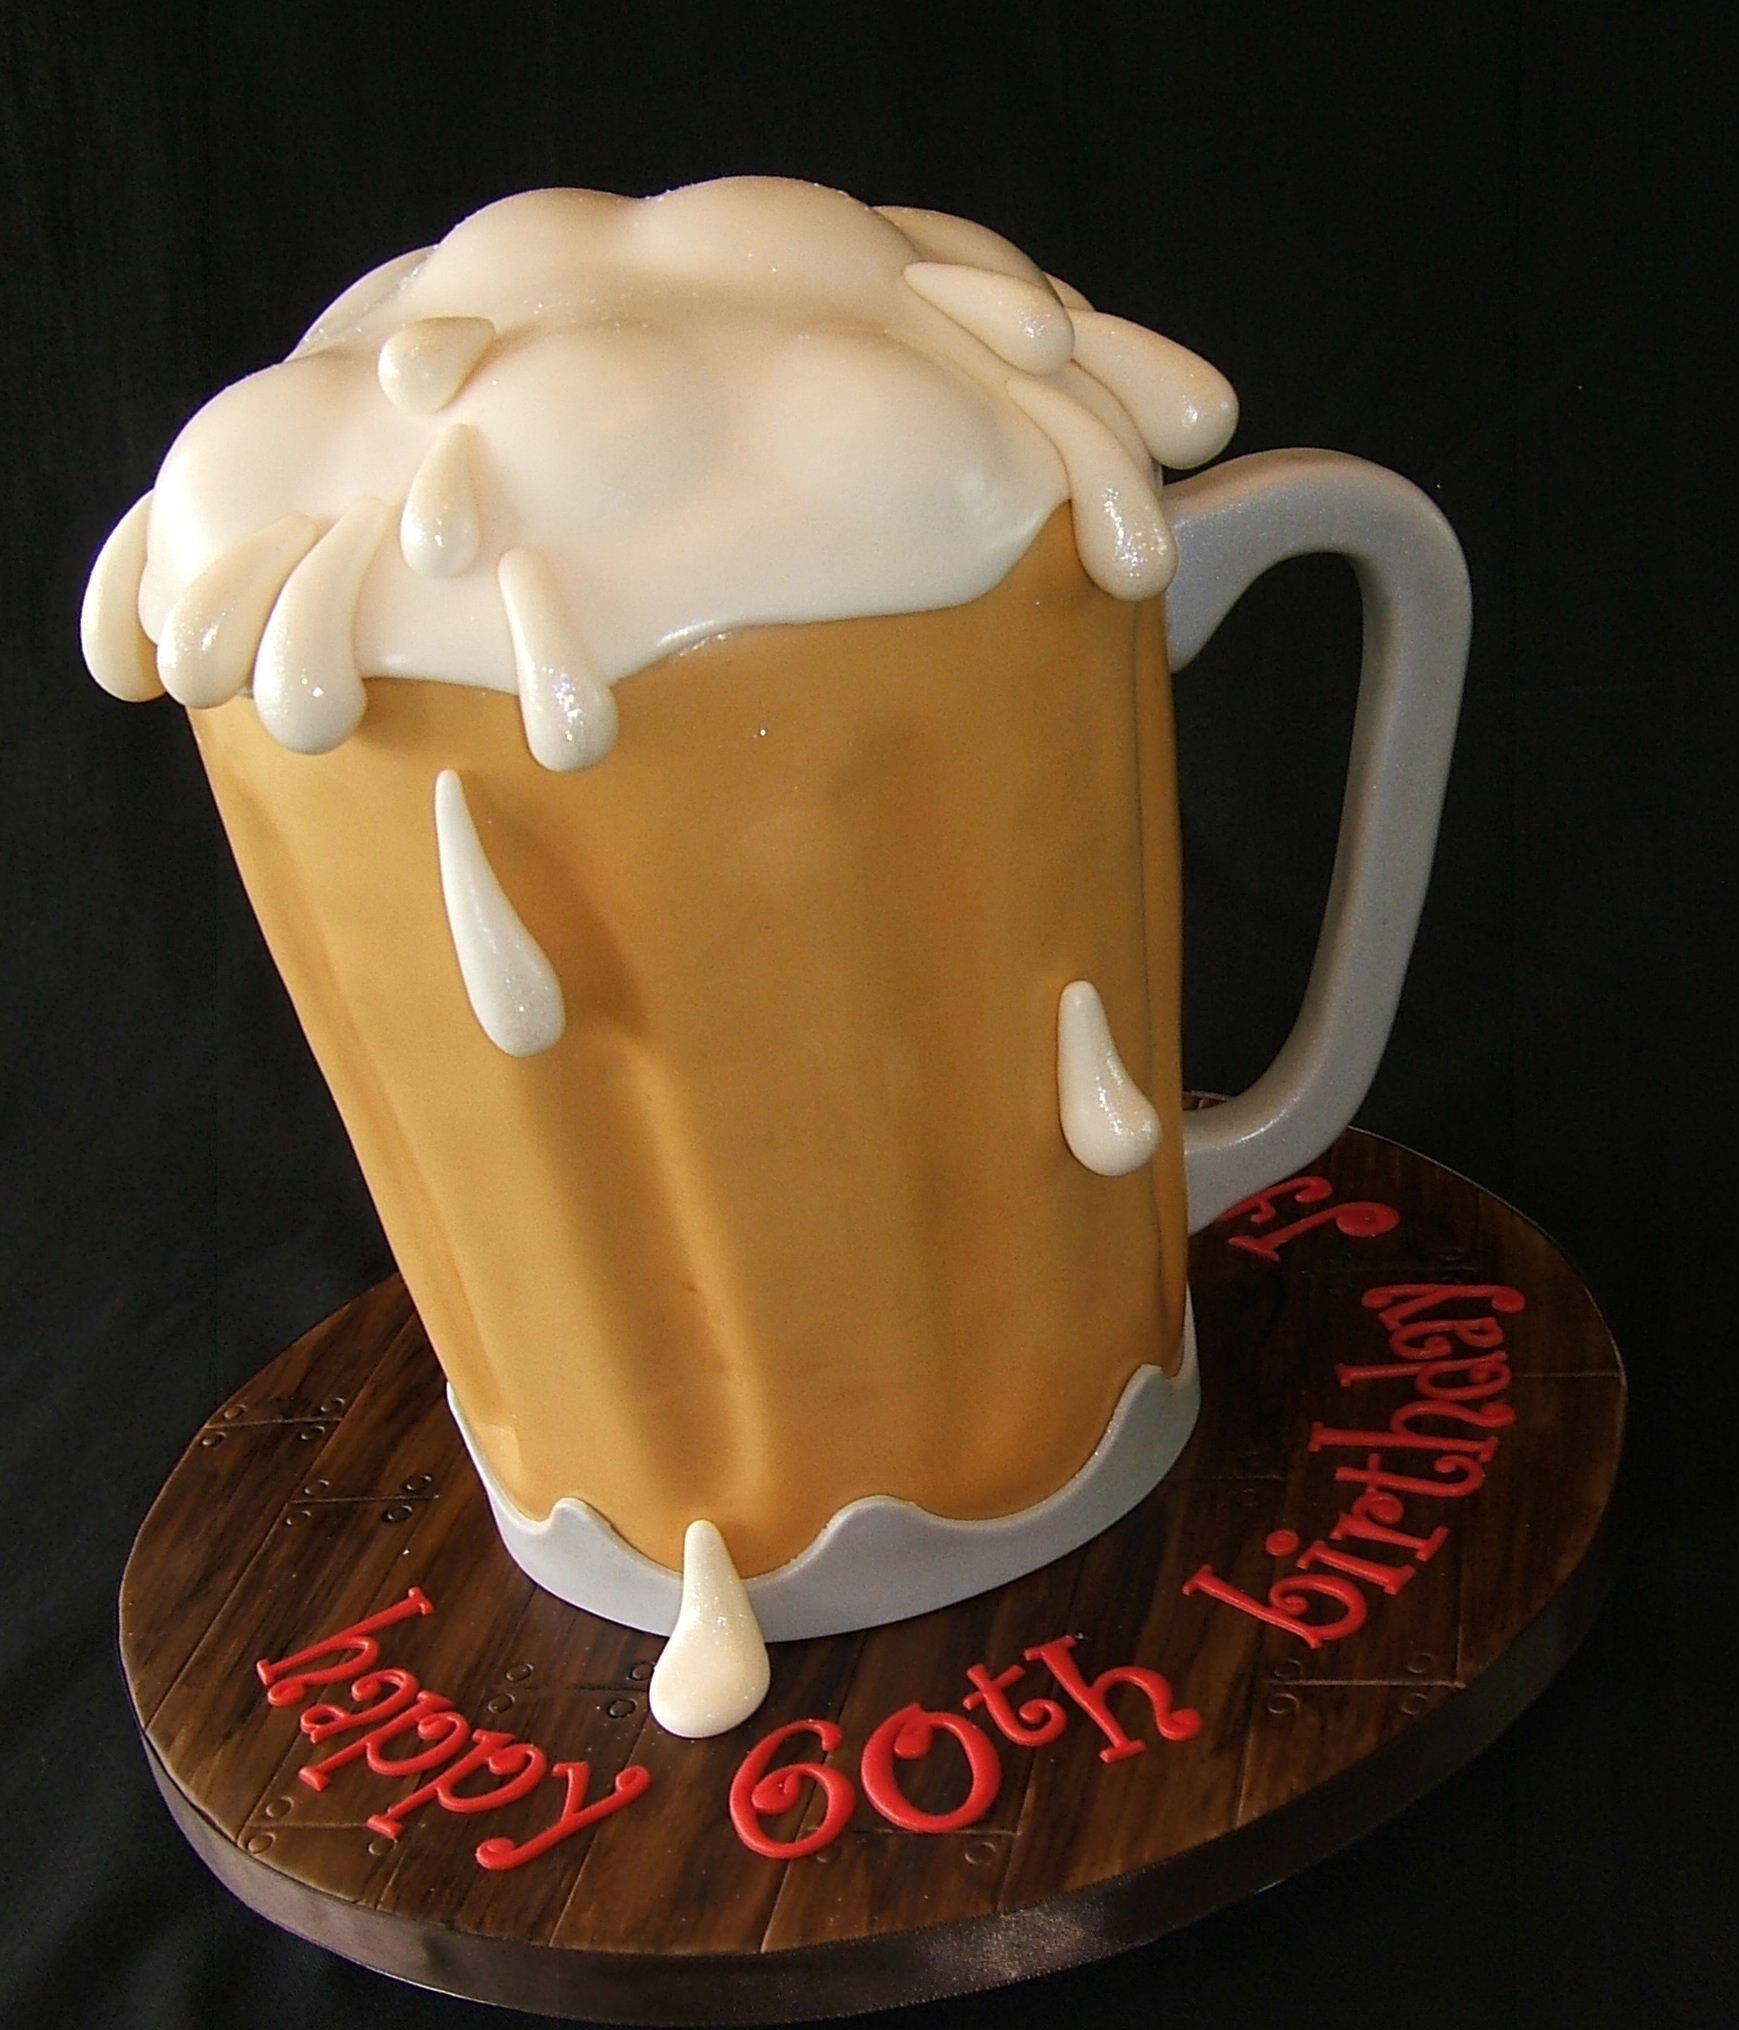 Beer Mug Cakes – Decoration Ideas | Little Birthday Cakes